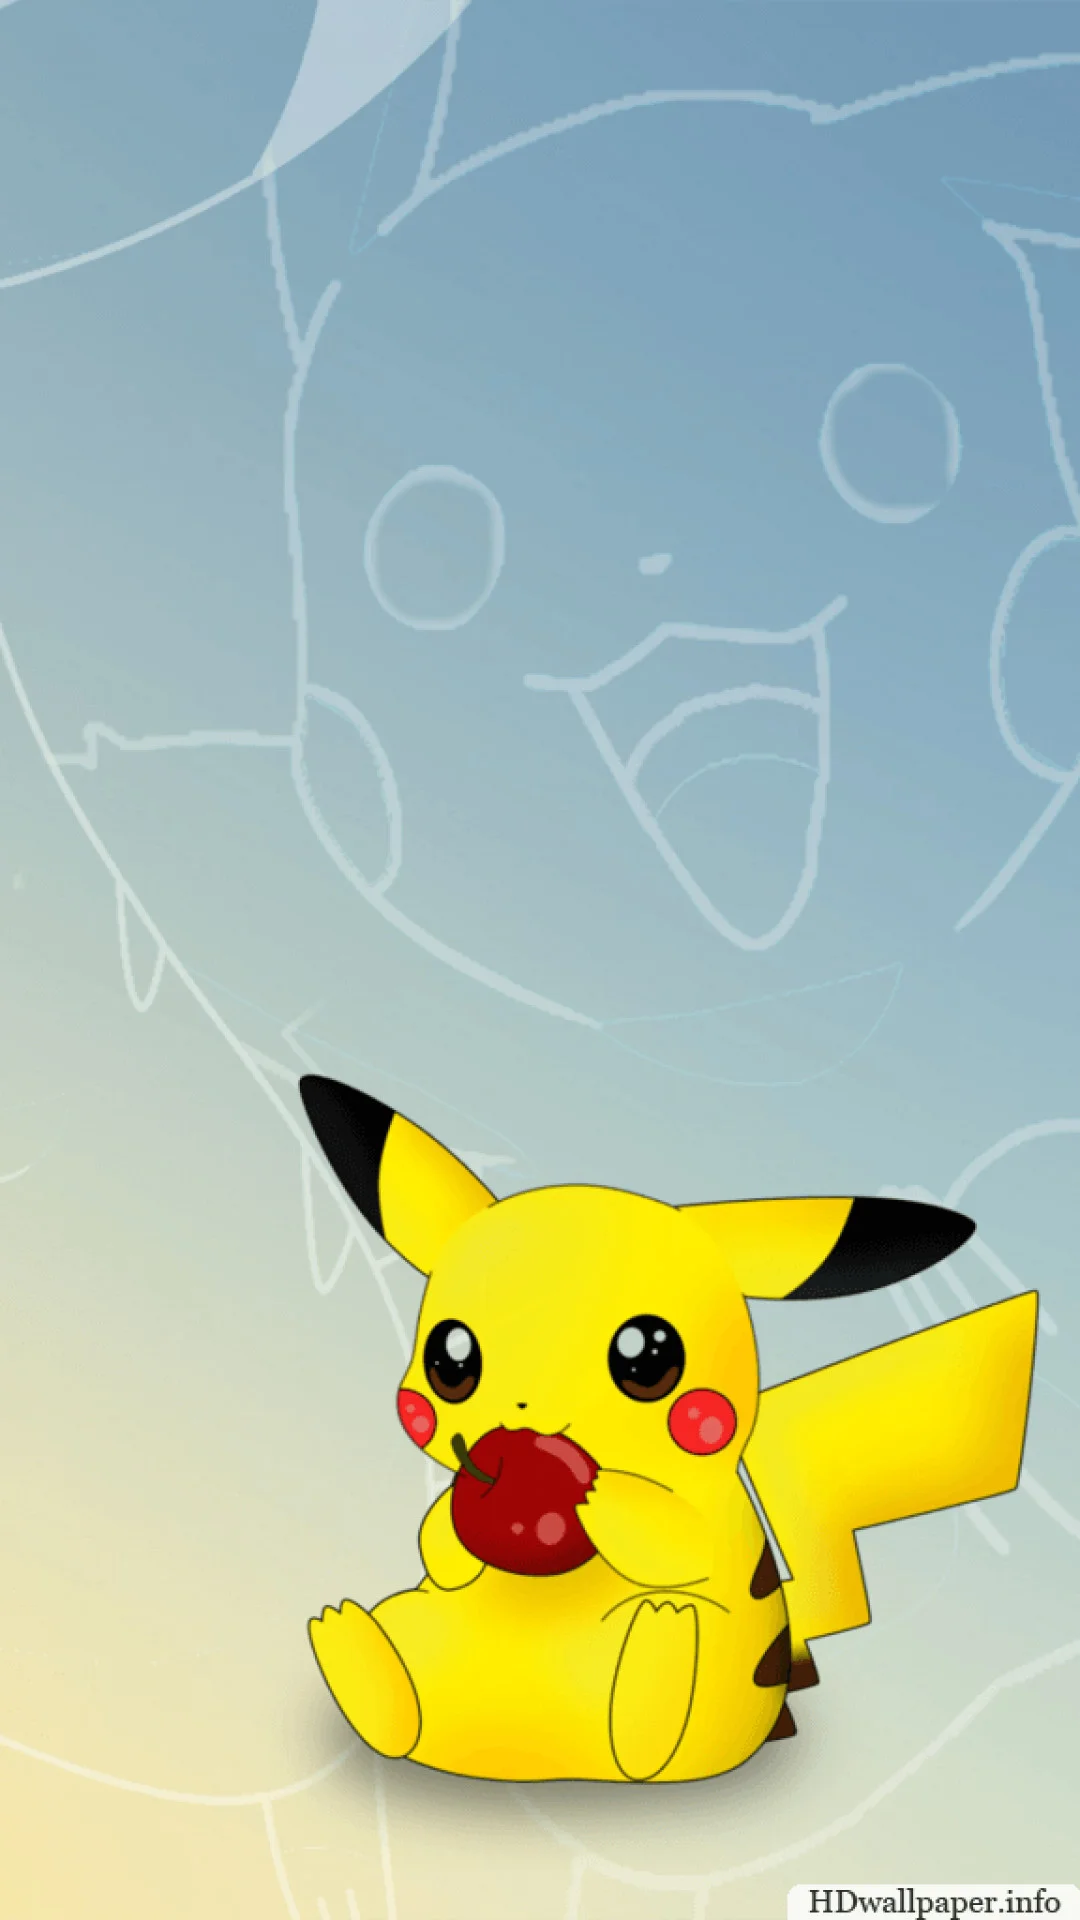 Pikachu wallpaper iphone 6 plus